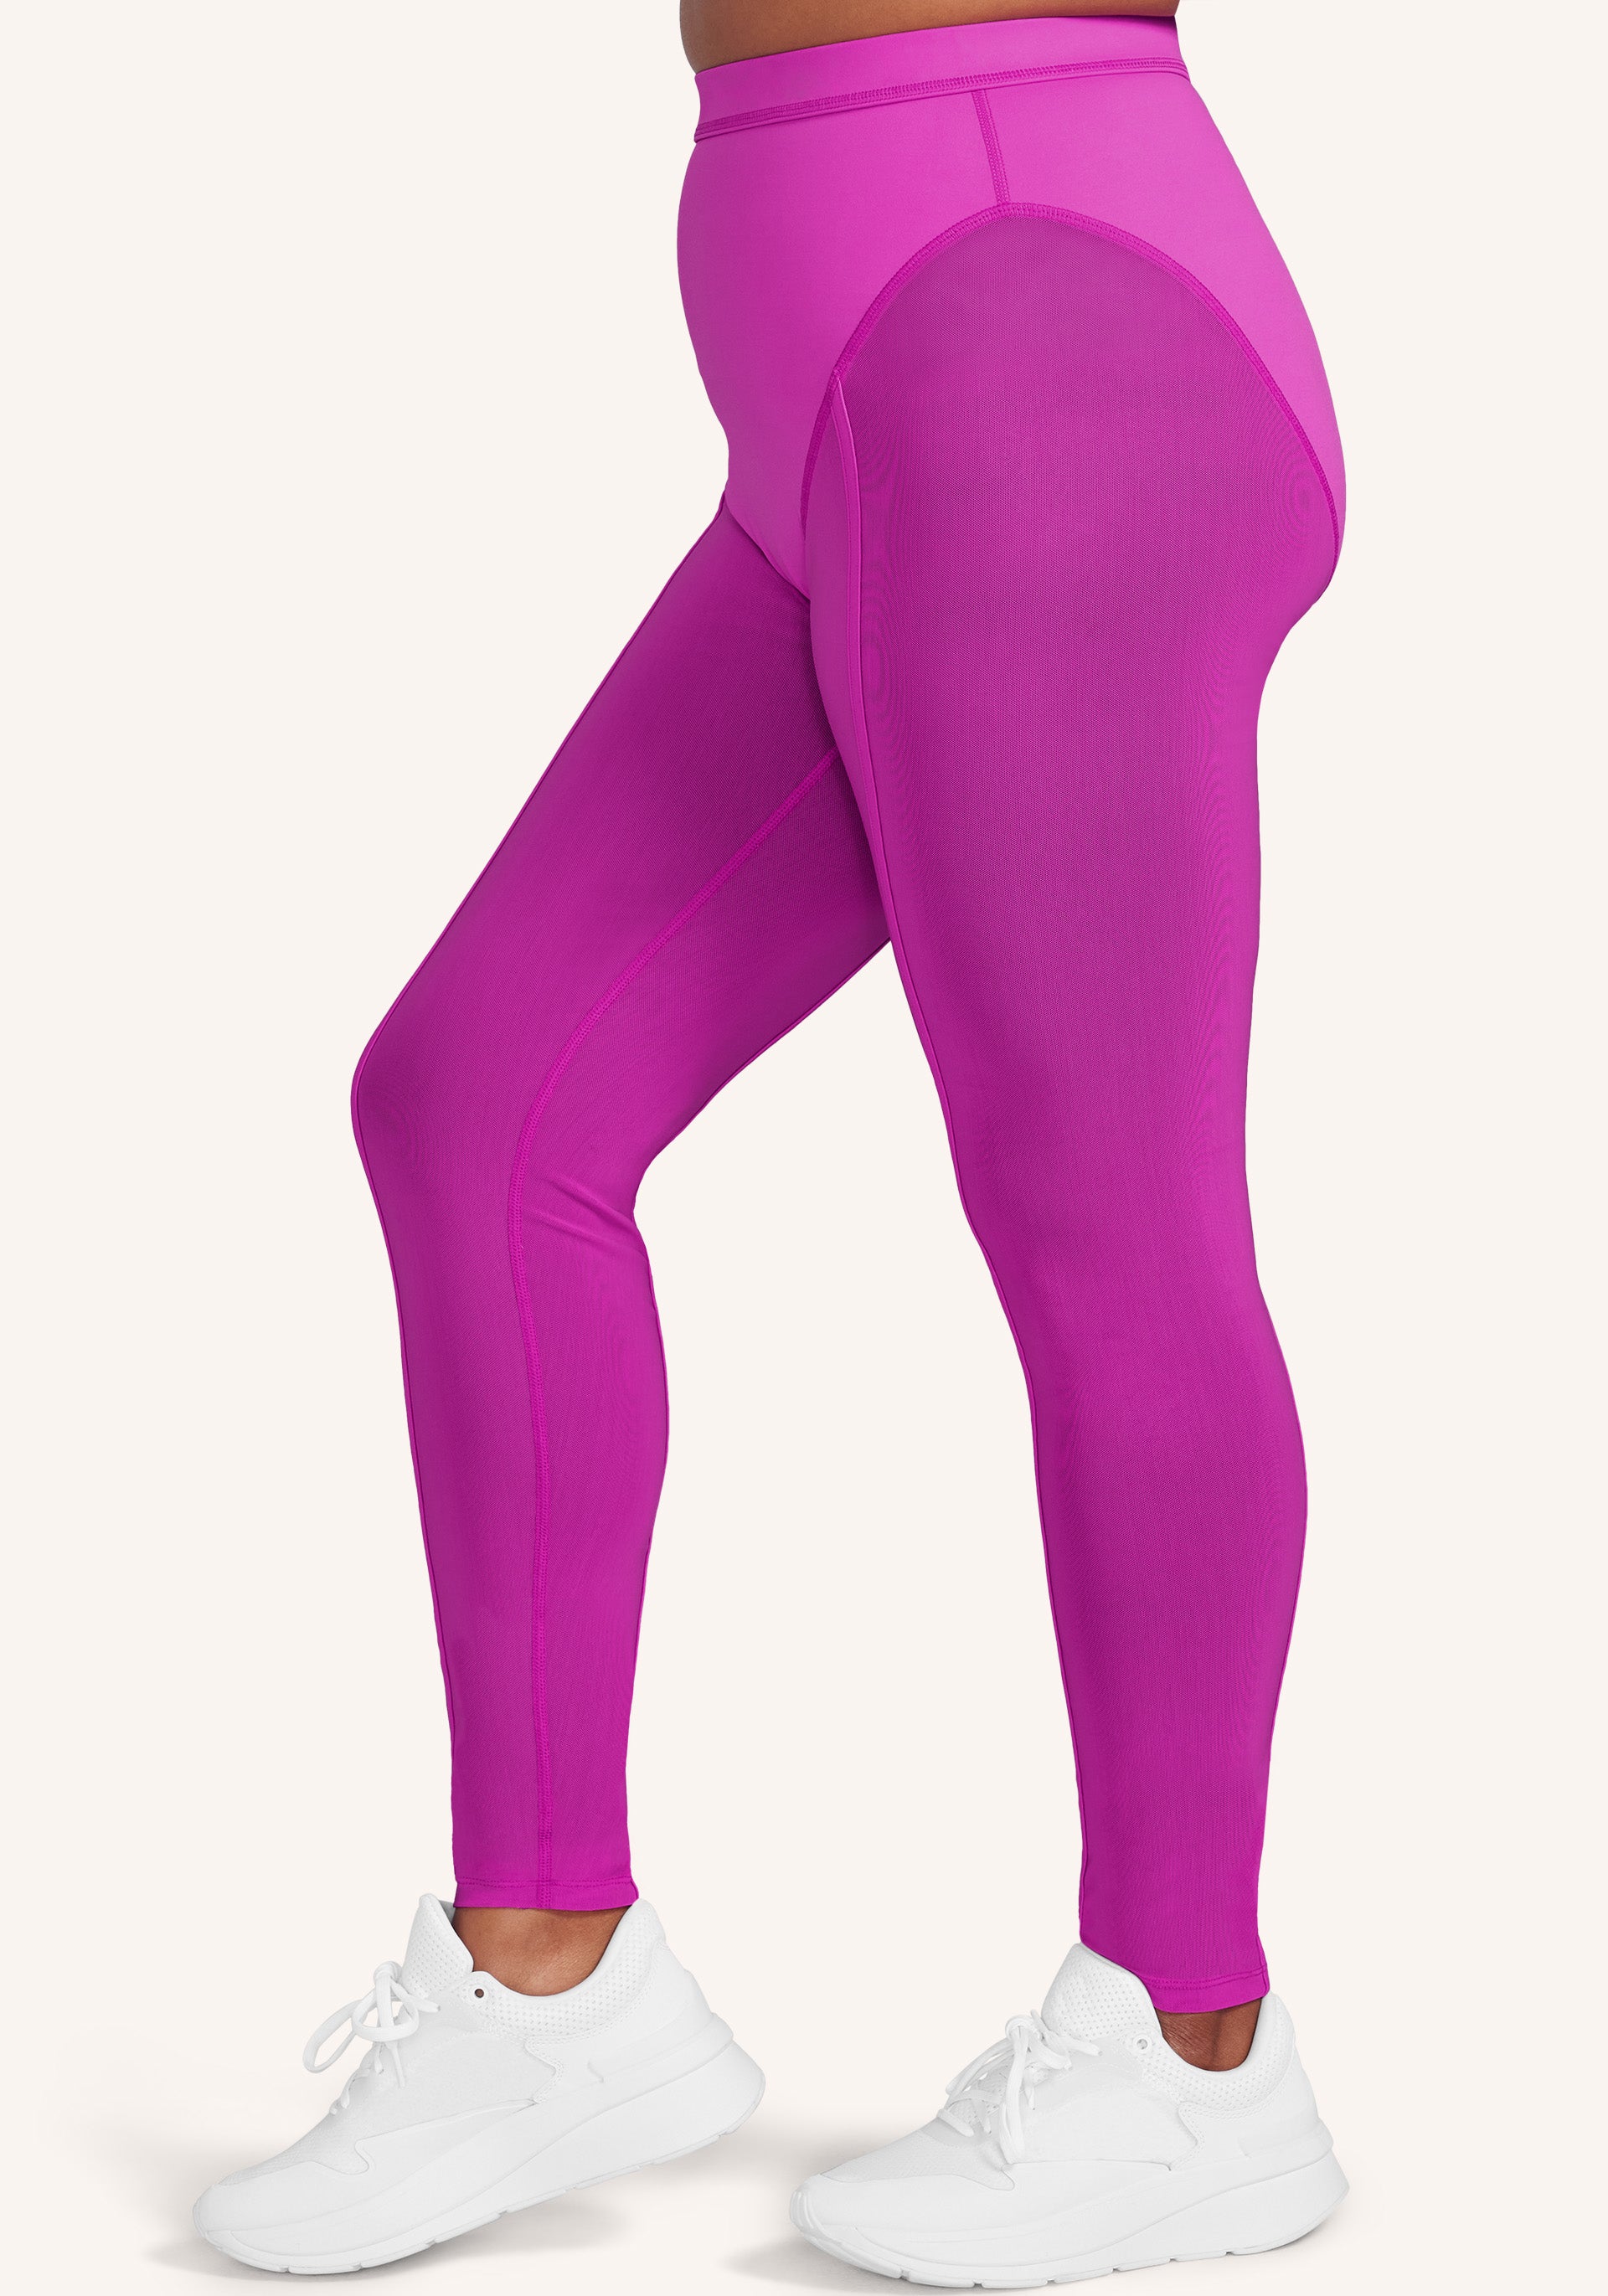 WITH Peloton Multicolor Composite Bra and Reversible leggings